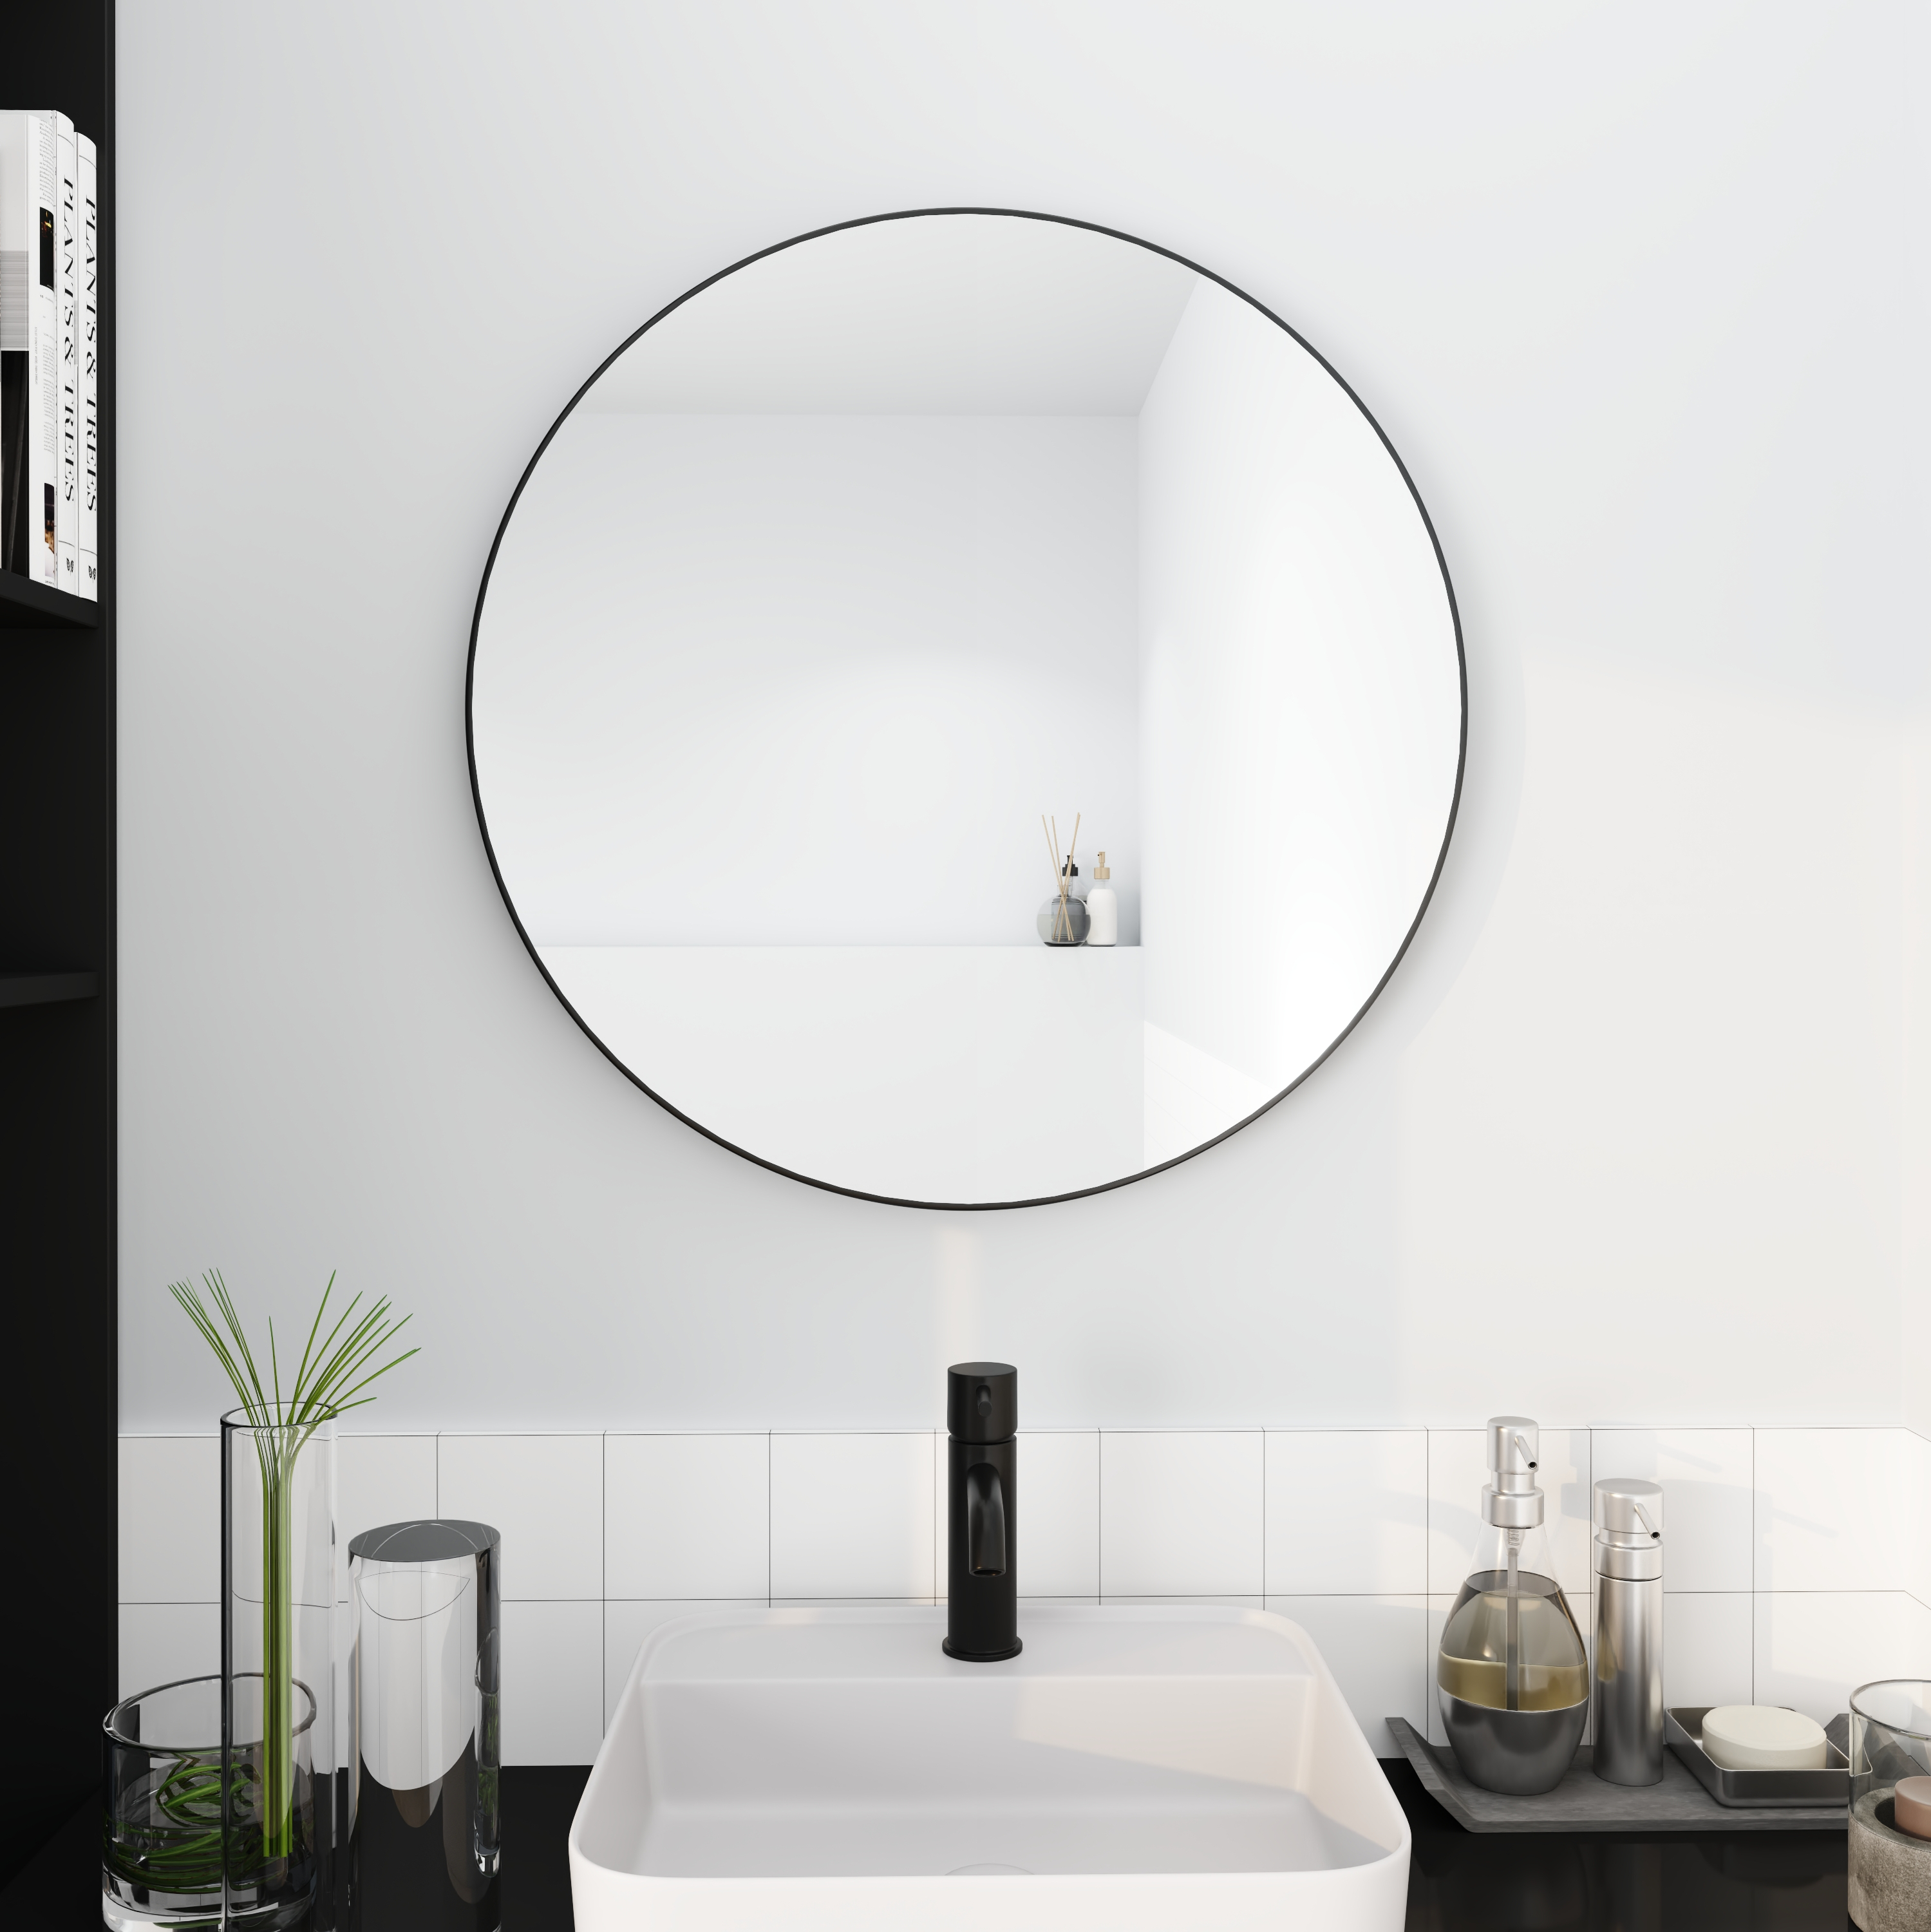 32 x 32 Inch Bathroom Mirror Black Aluminum Frame